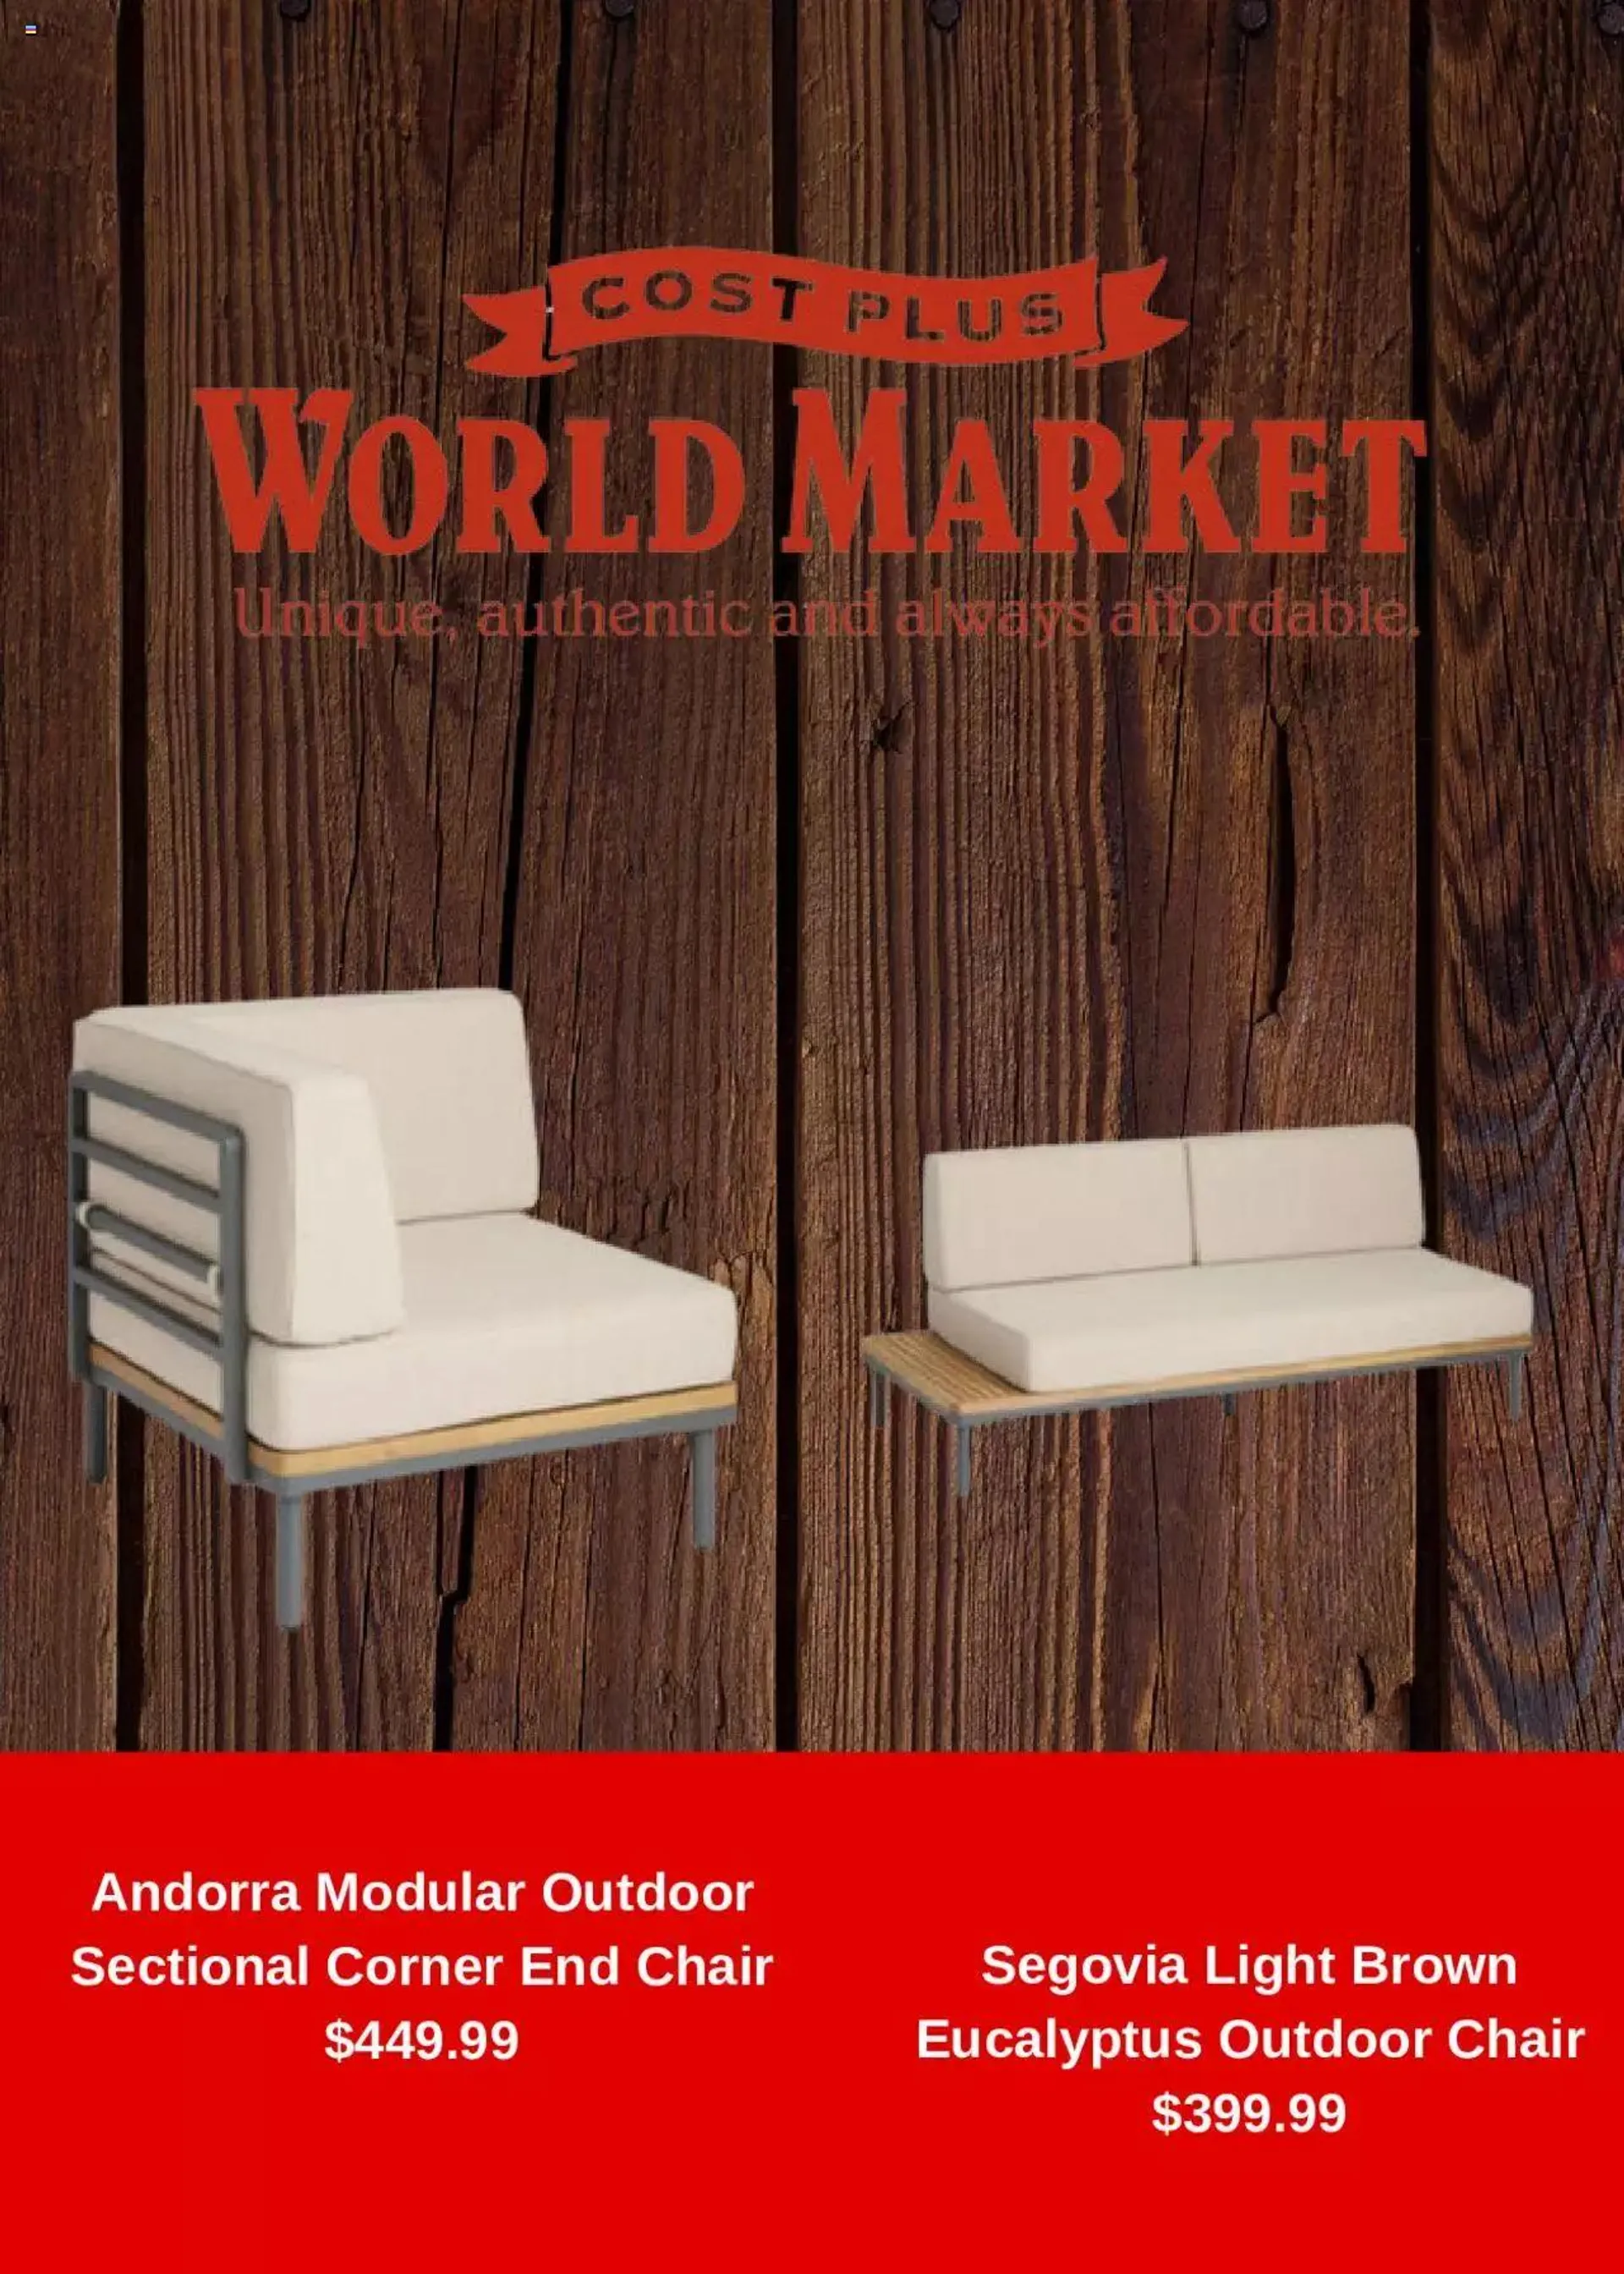 World Market - Weekly Ad - 0